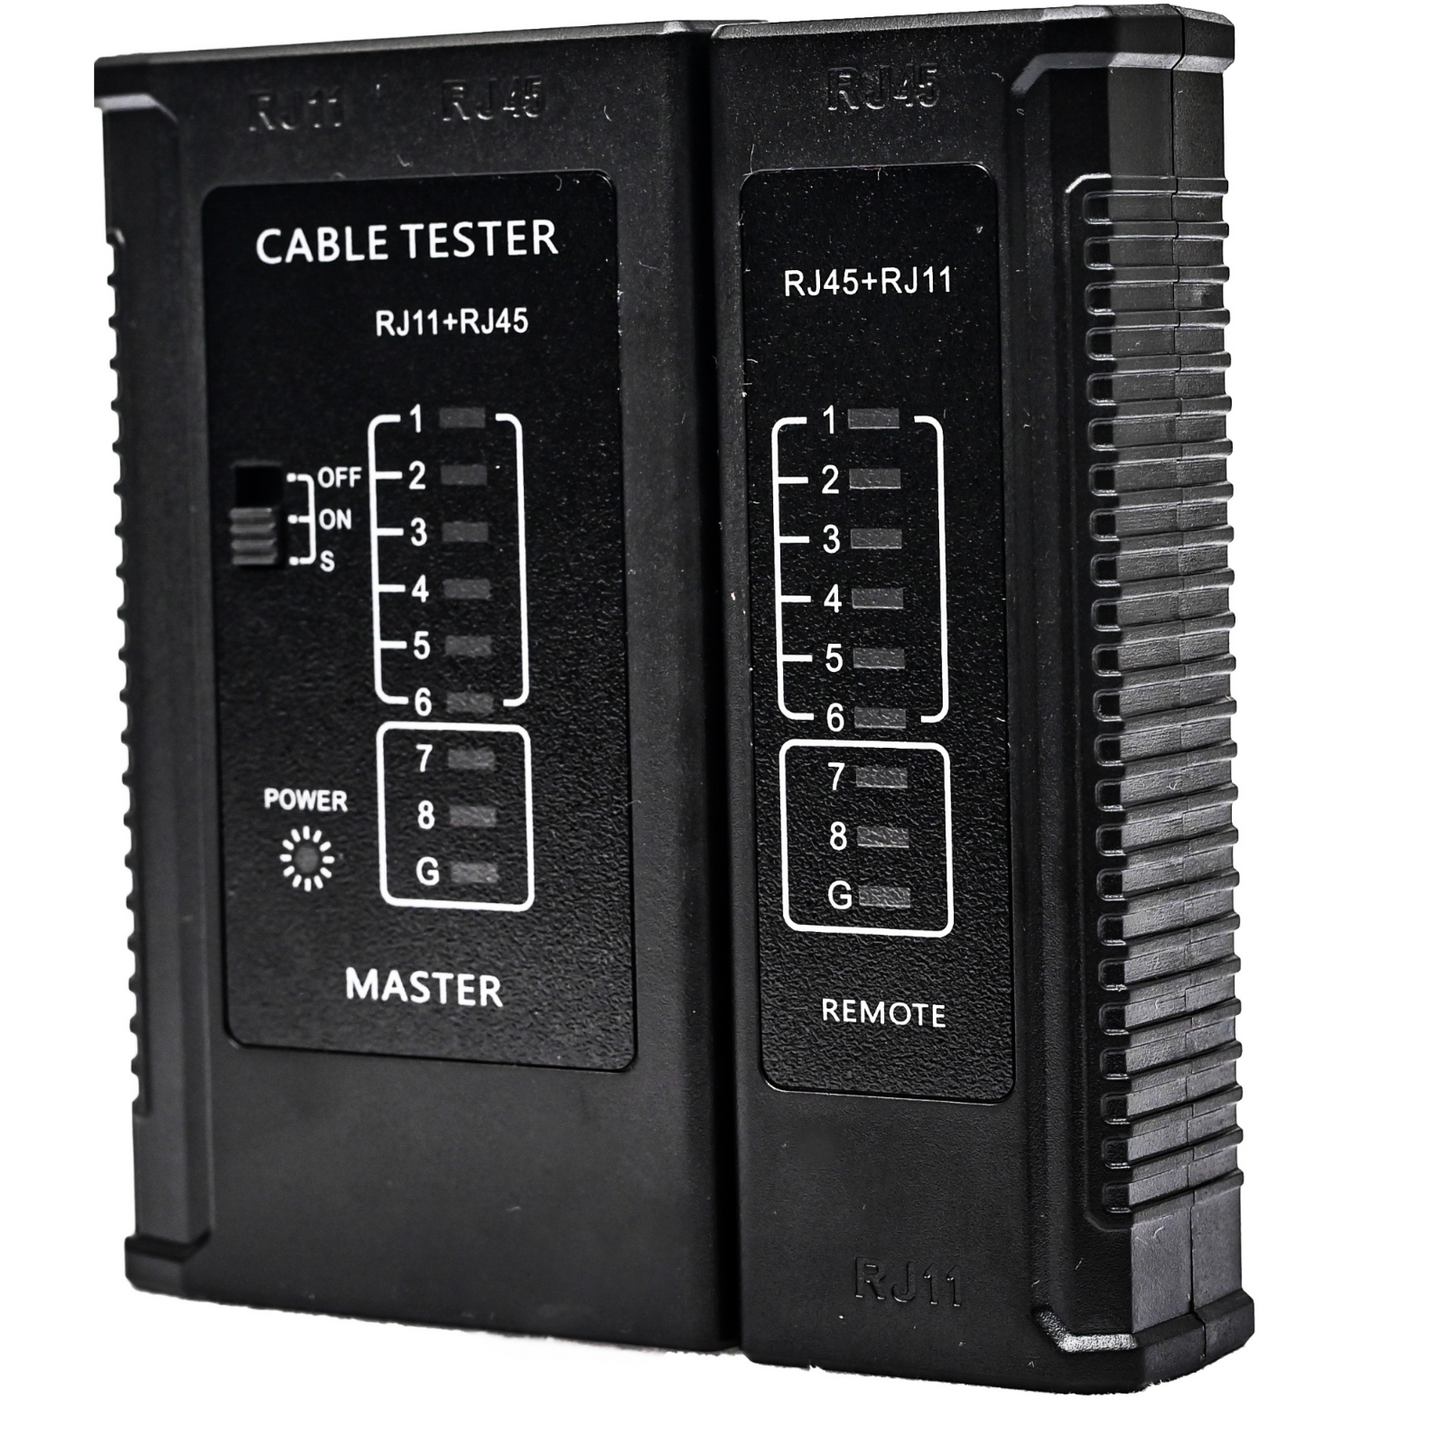 Network CABLE Tester RJ45 Ethernet Testing Test Tool Cat5 Cat5e Cat6 Cat7 UK